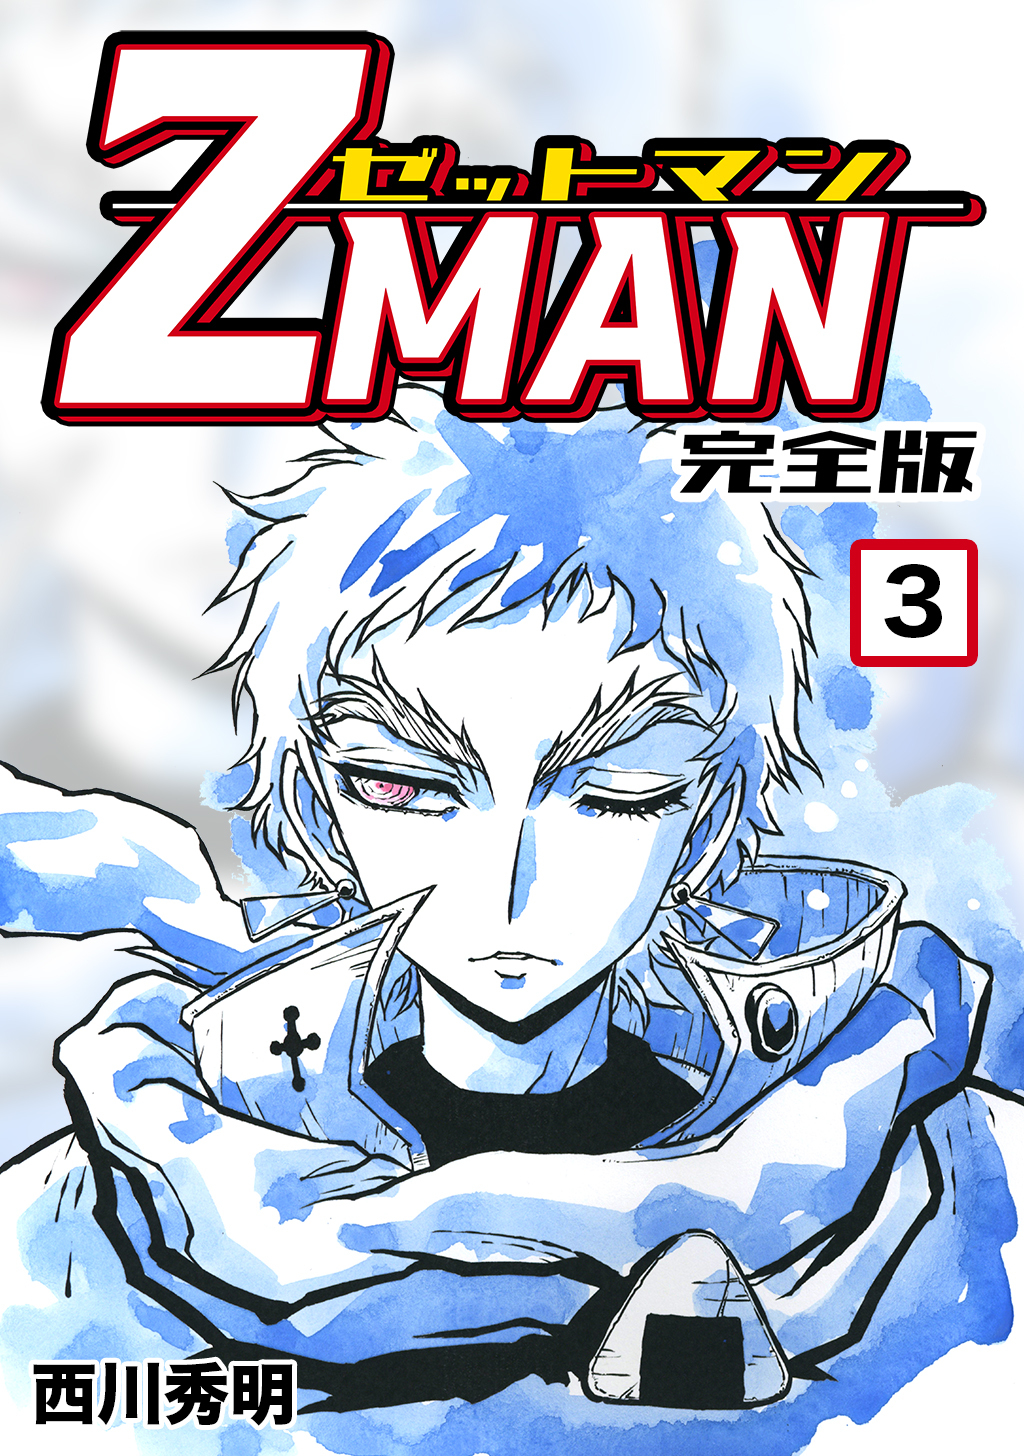 Z Man ゼットマン 完全版 3 無料 試し読みなら Amebaマンガ 旧 読書のお時間です